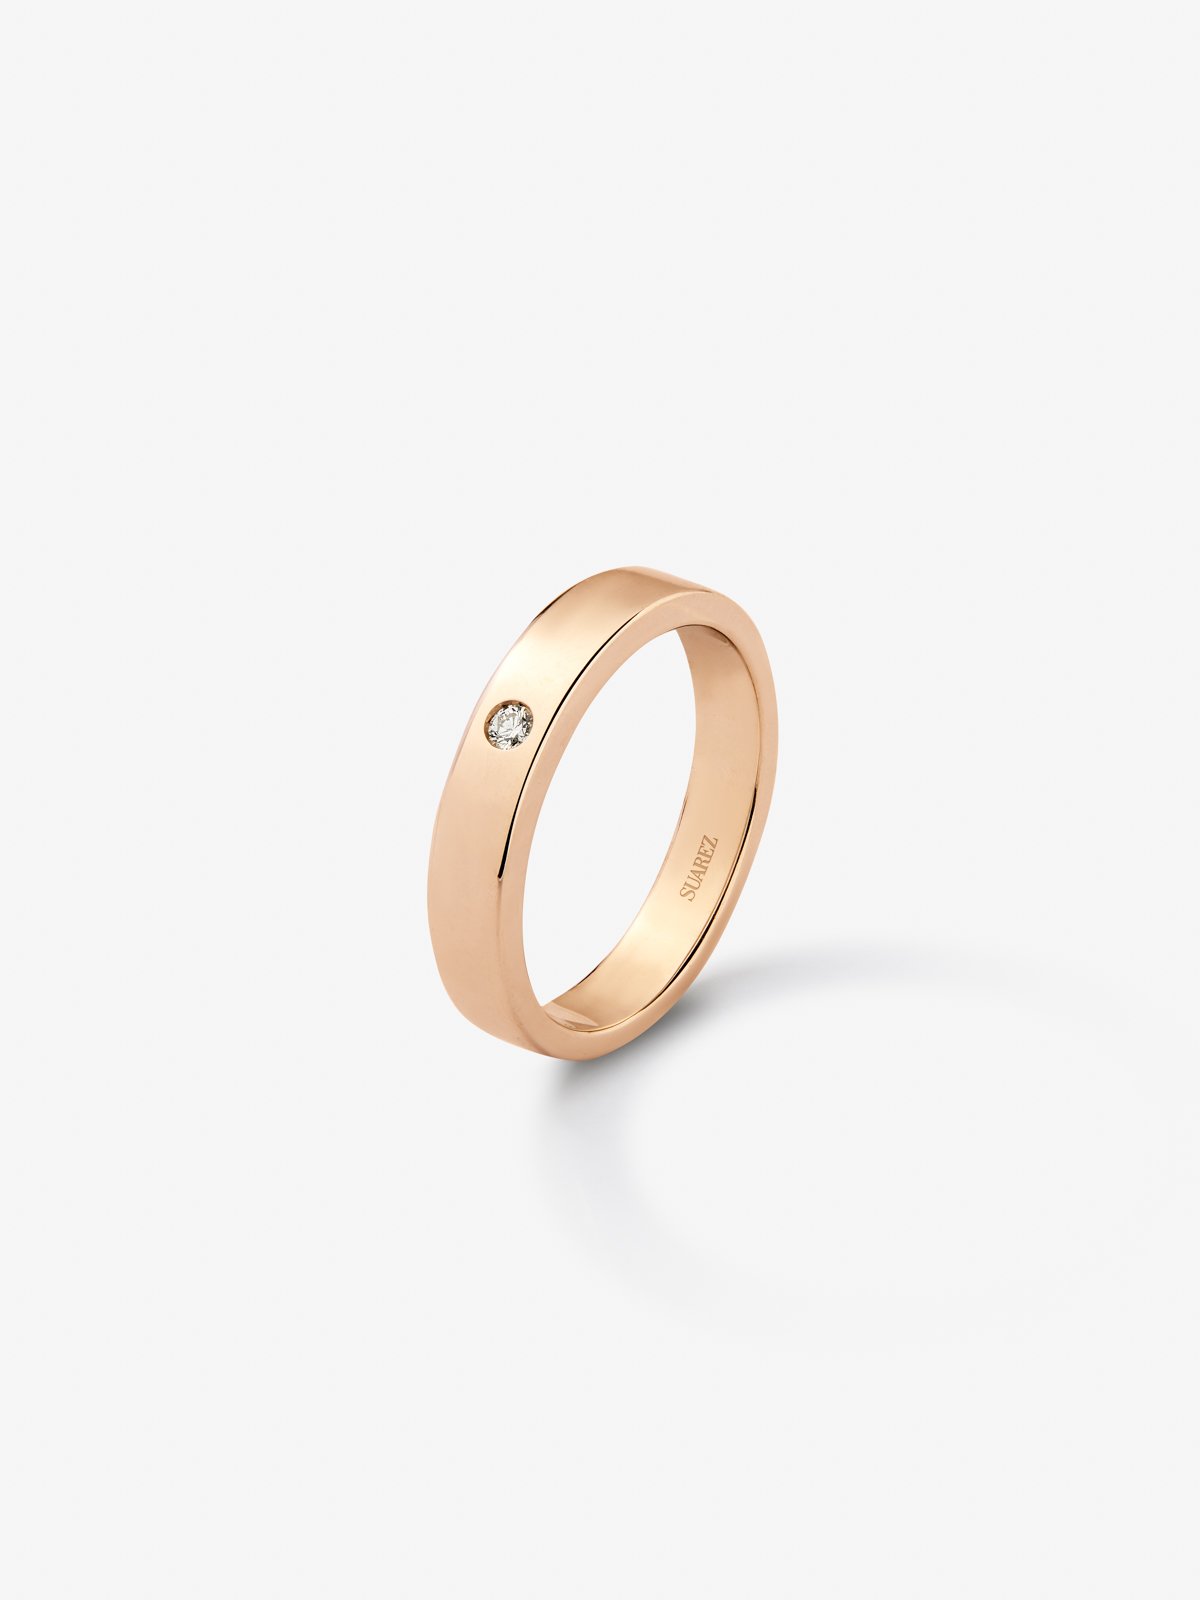 18K Rose Gold Wedding Band Ring with Diamond